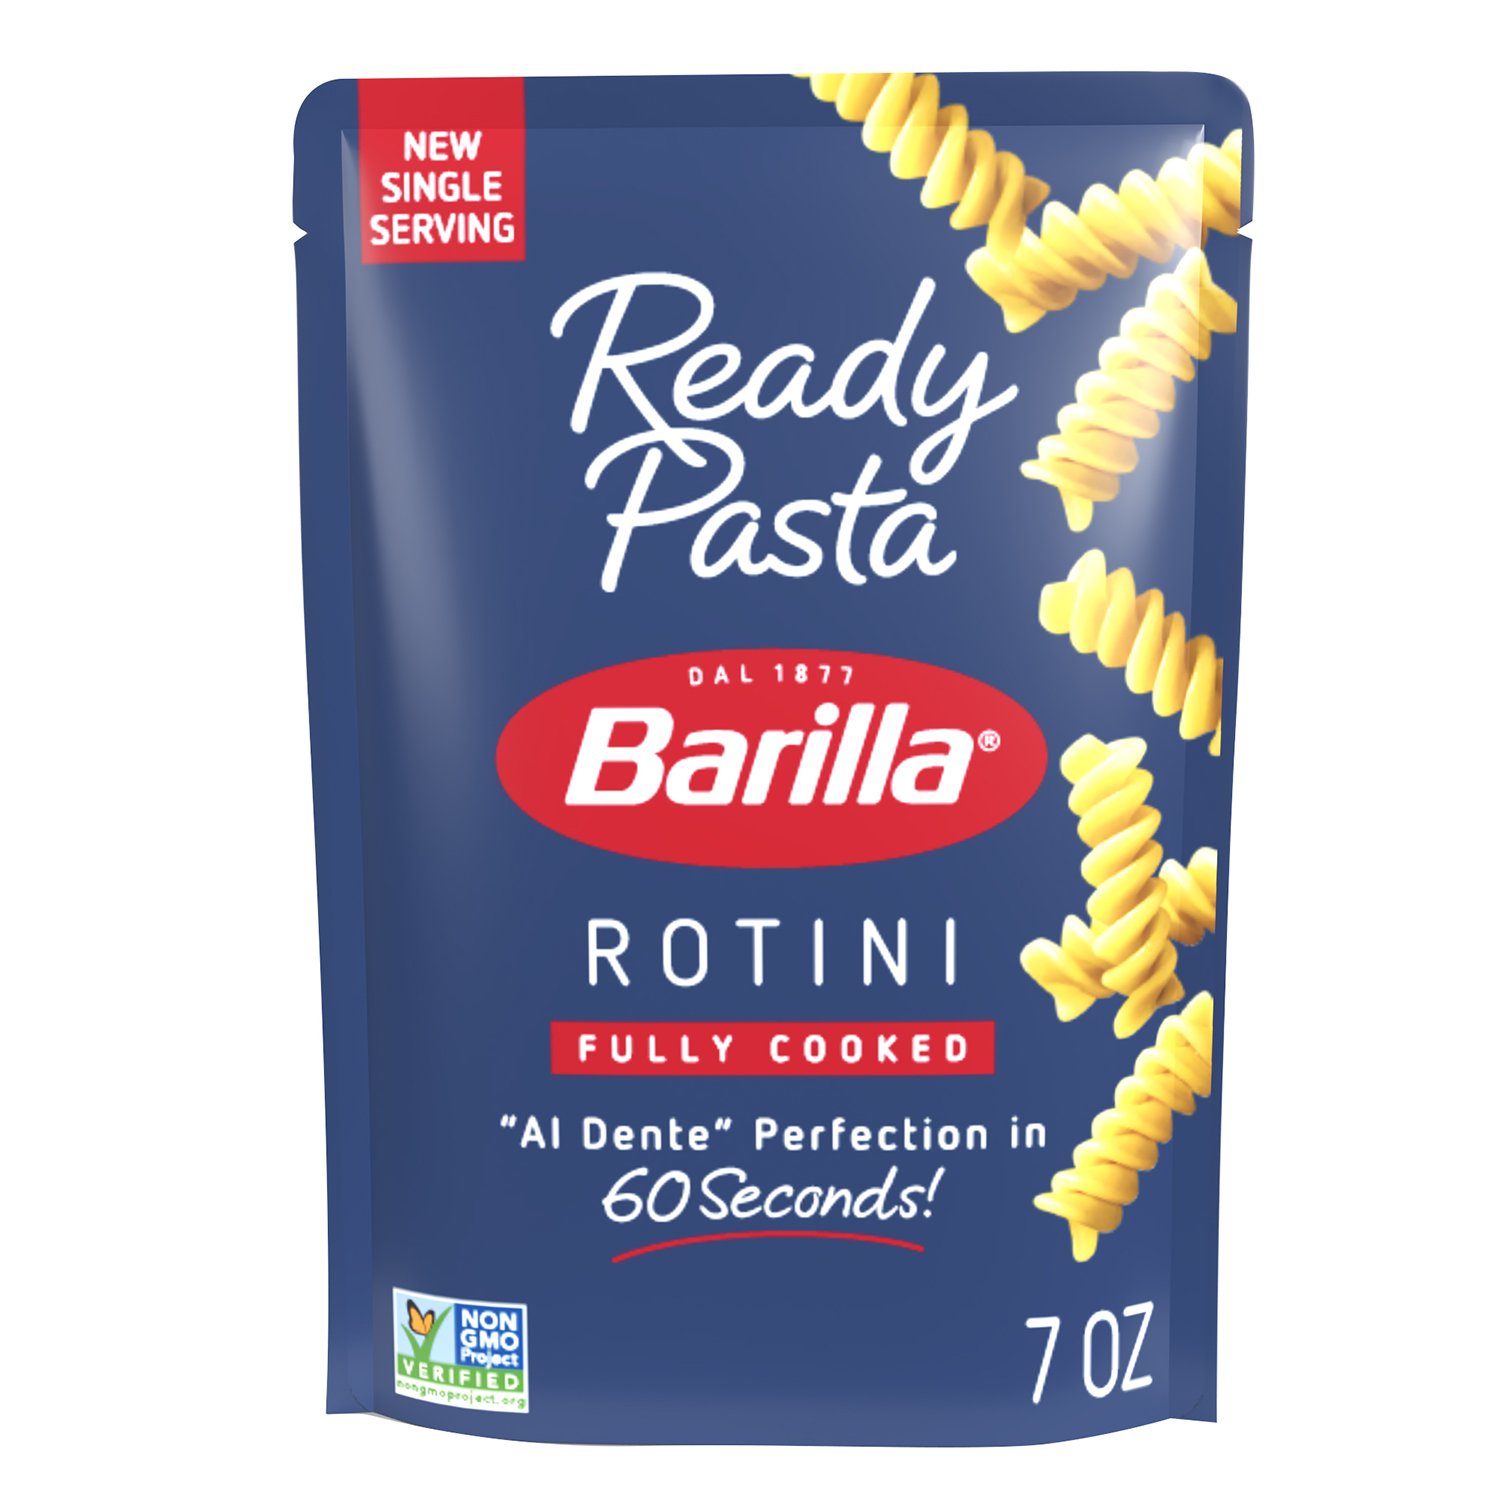 Pasta Pasta Rotini Shop Ready - at H-E-B Barilla